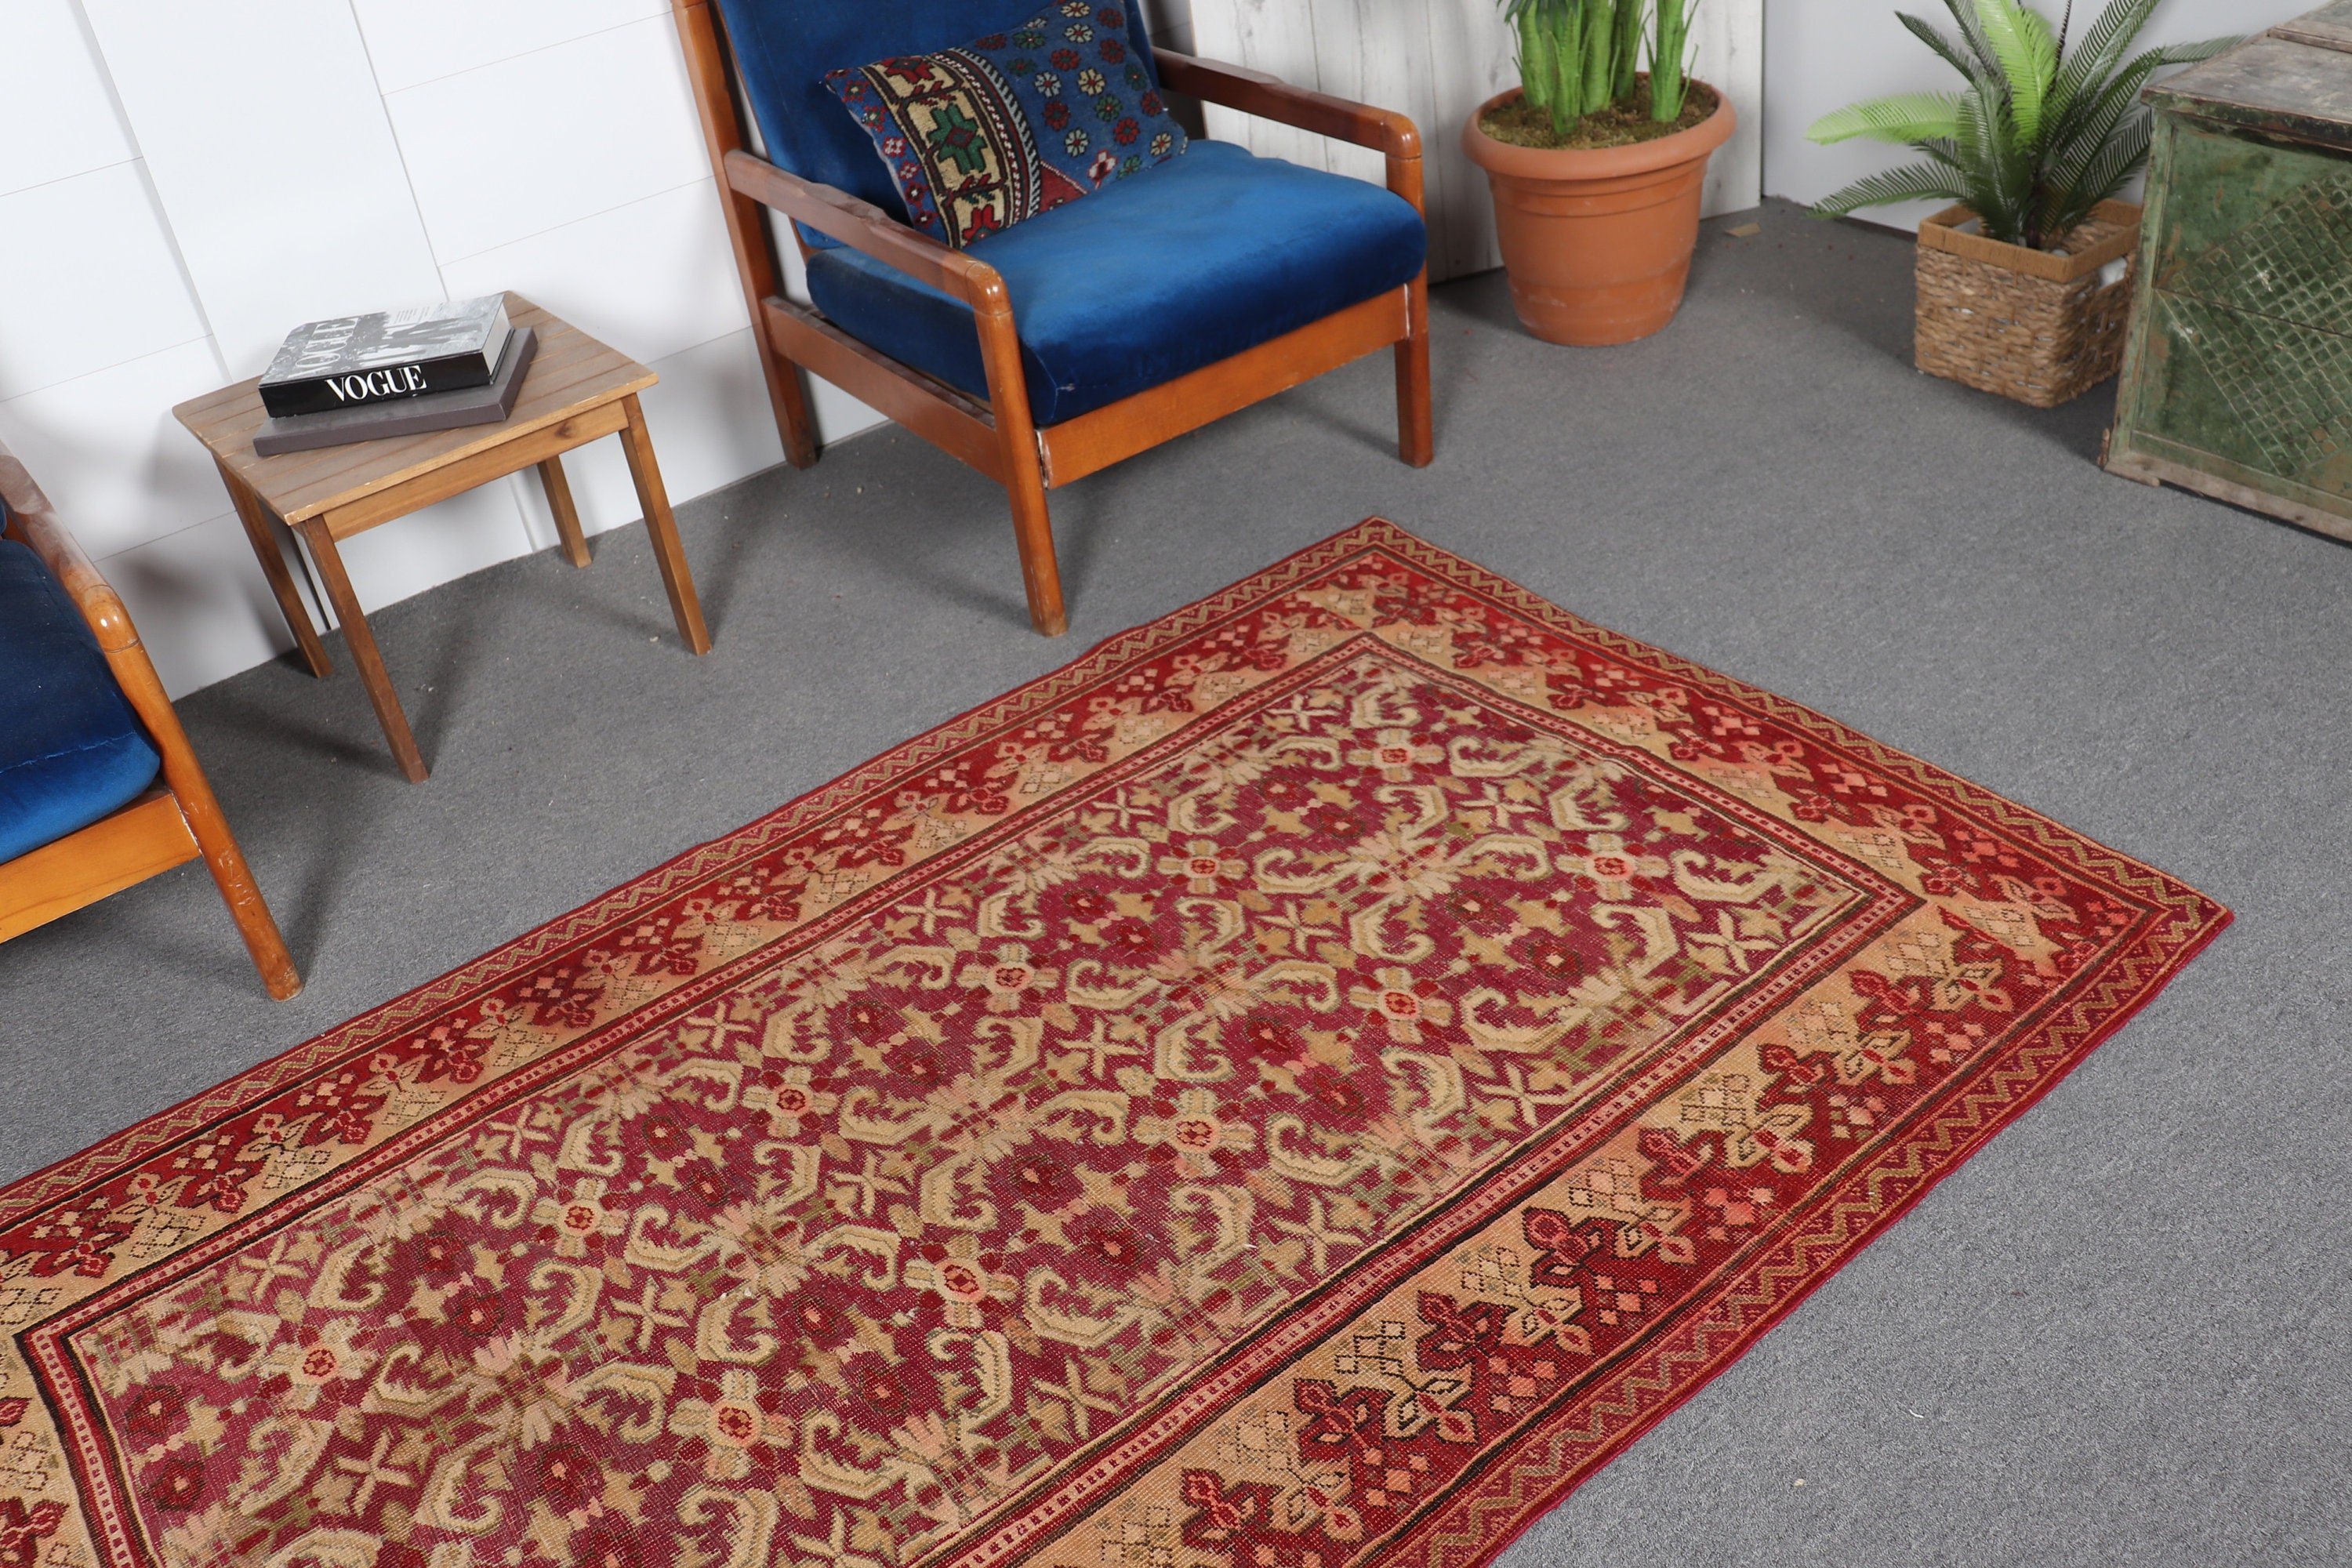 Antique Rug, Rugs for Living Room, Turkish Rug, Vintage Rugs, Living Room Rug, 4.2x6.6 ft Area Rug, Home Decor Rugs, Beige Oriental Rug